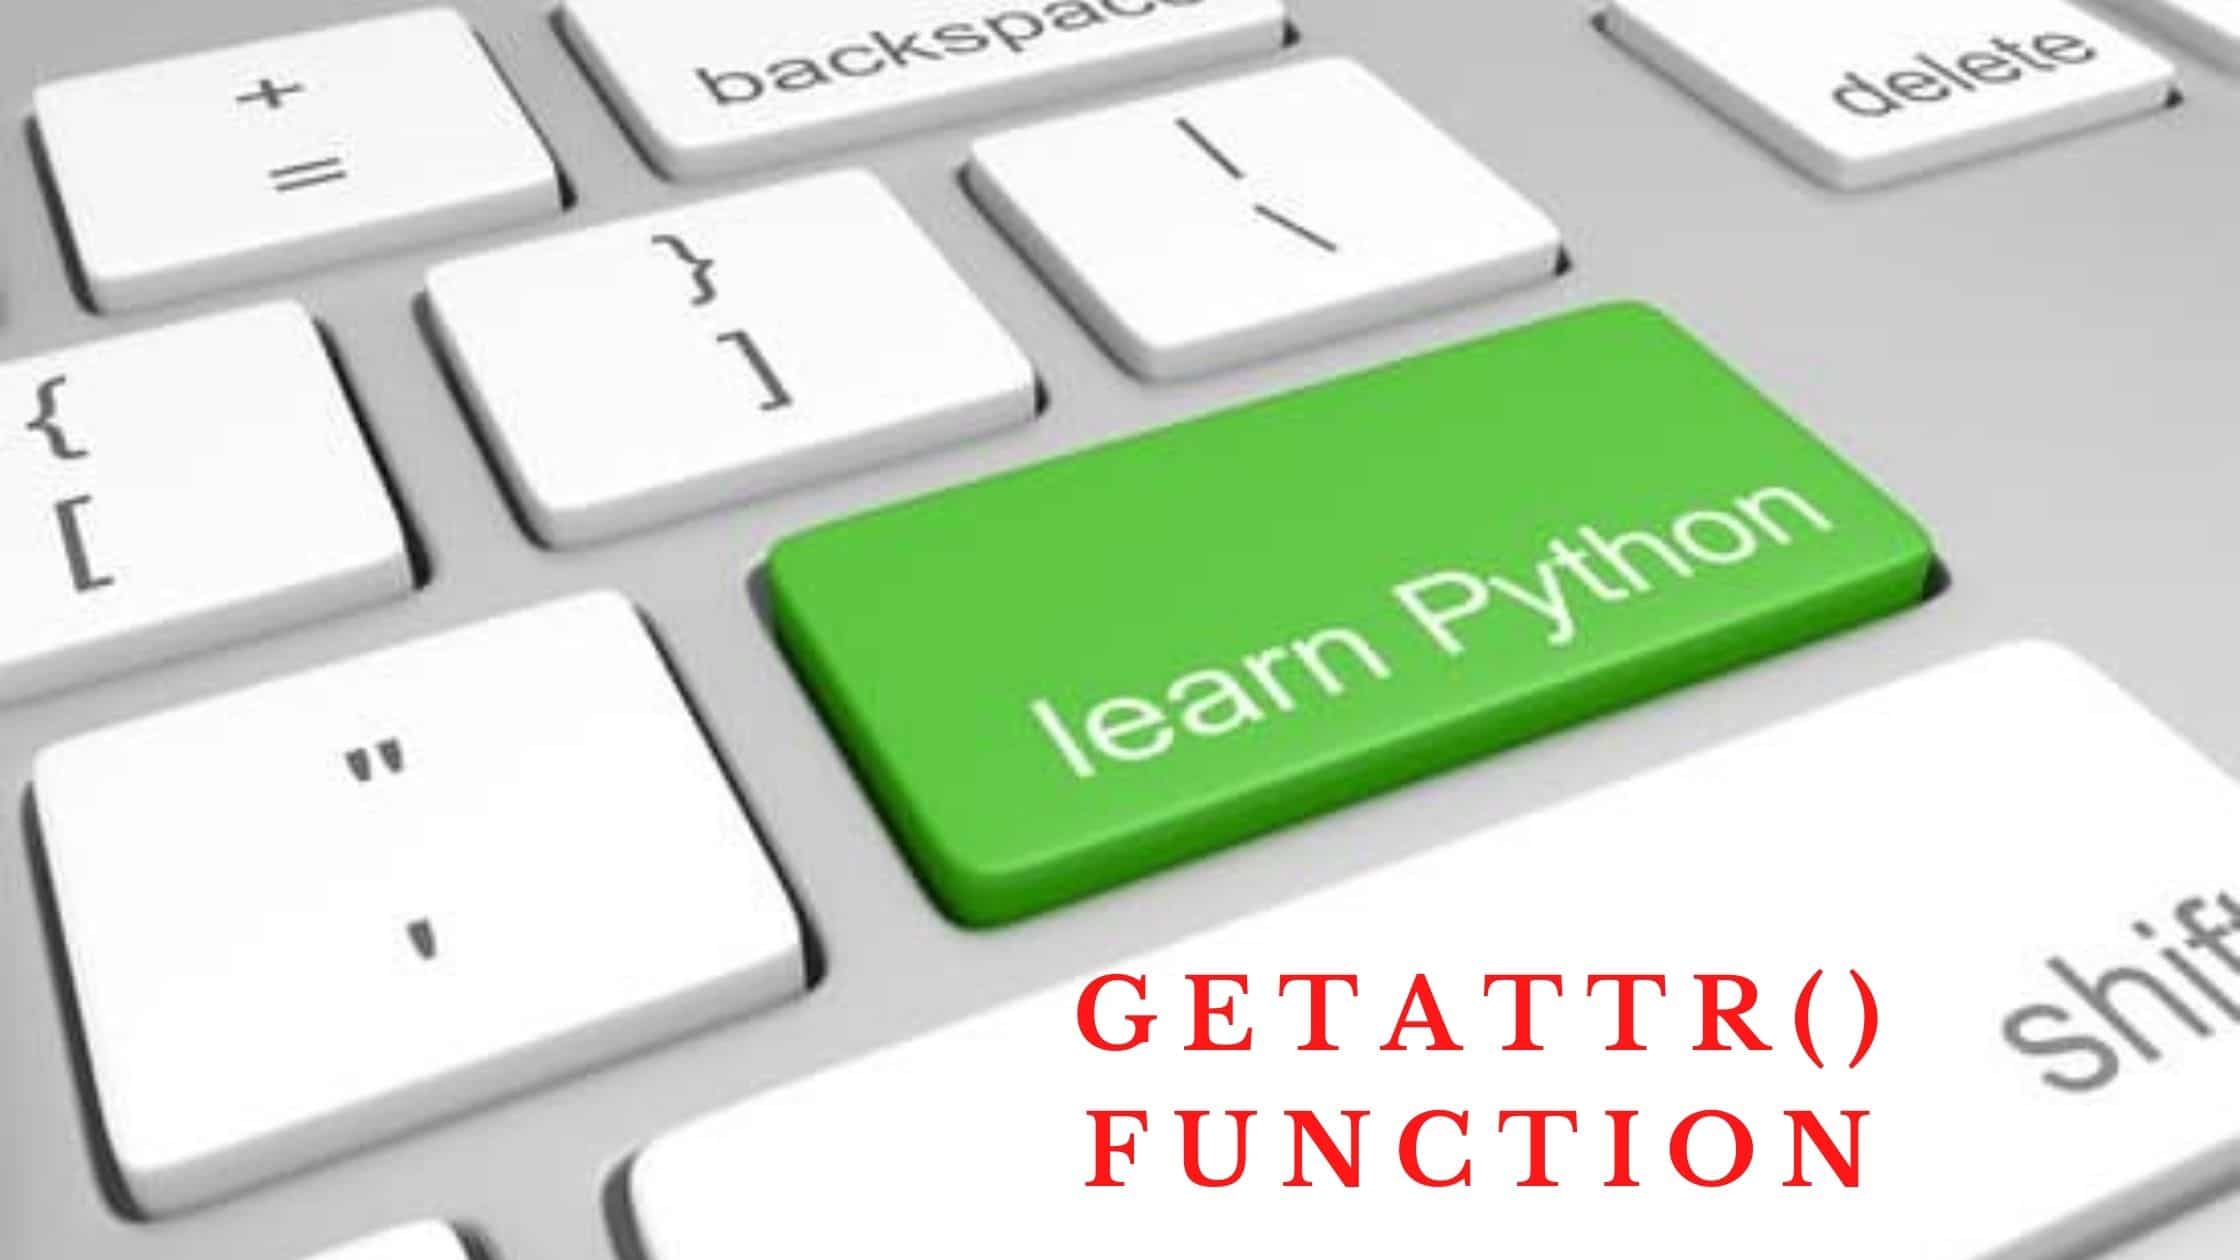 getattr() Function